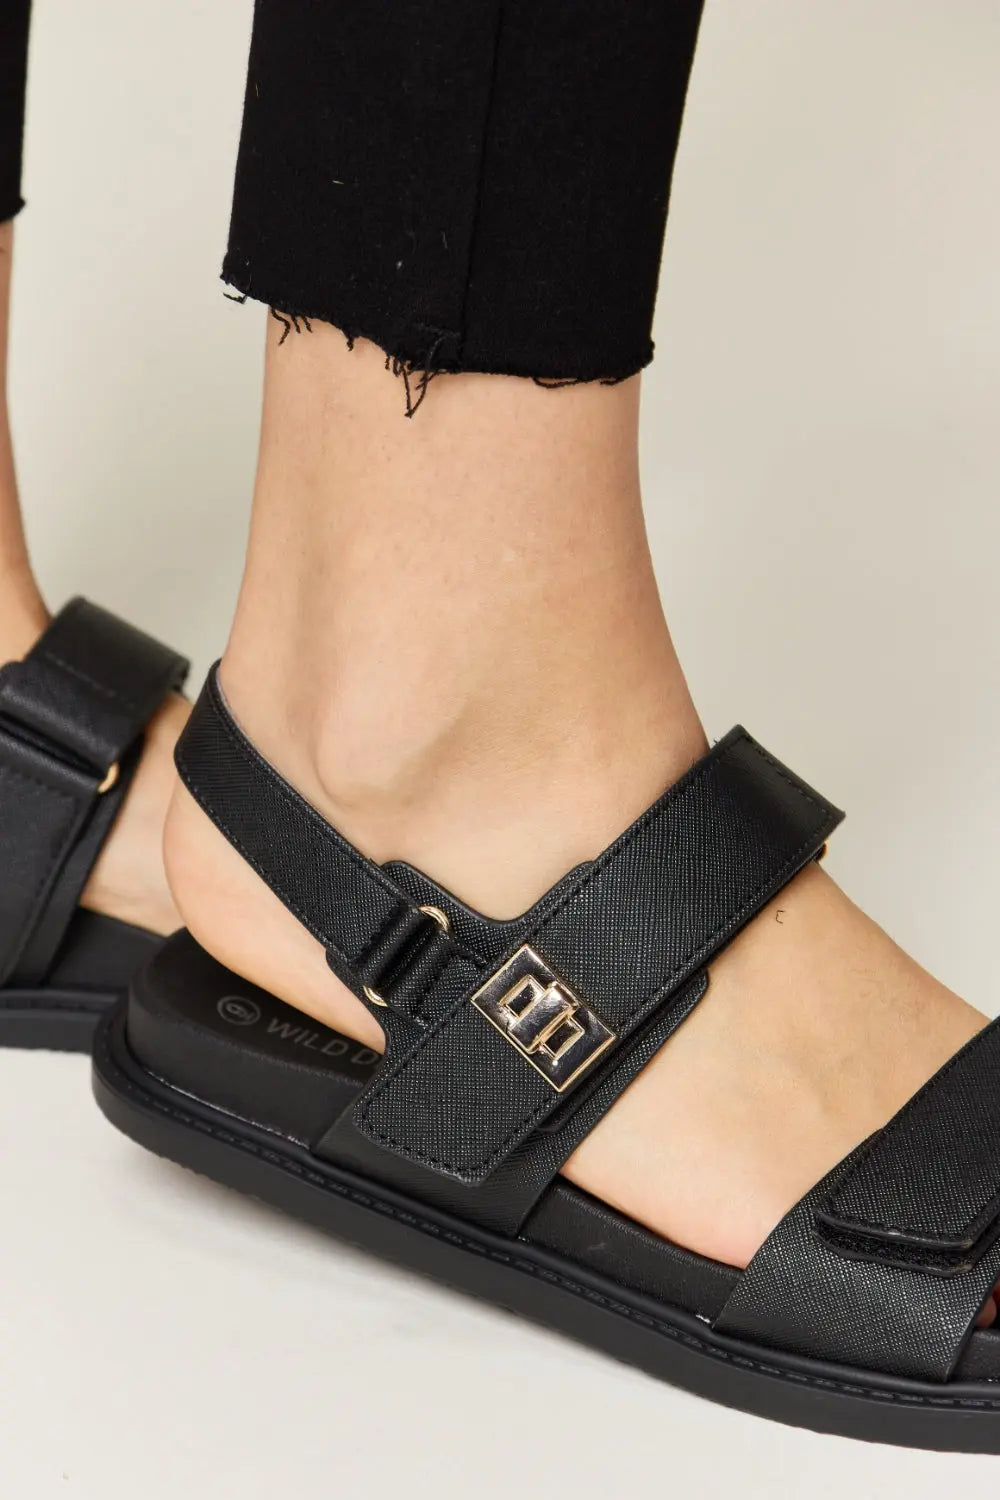 WILD DIVA Velcro Double Strap Slingback Sandals Trendsi